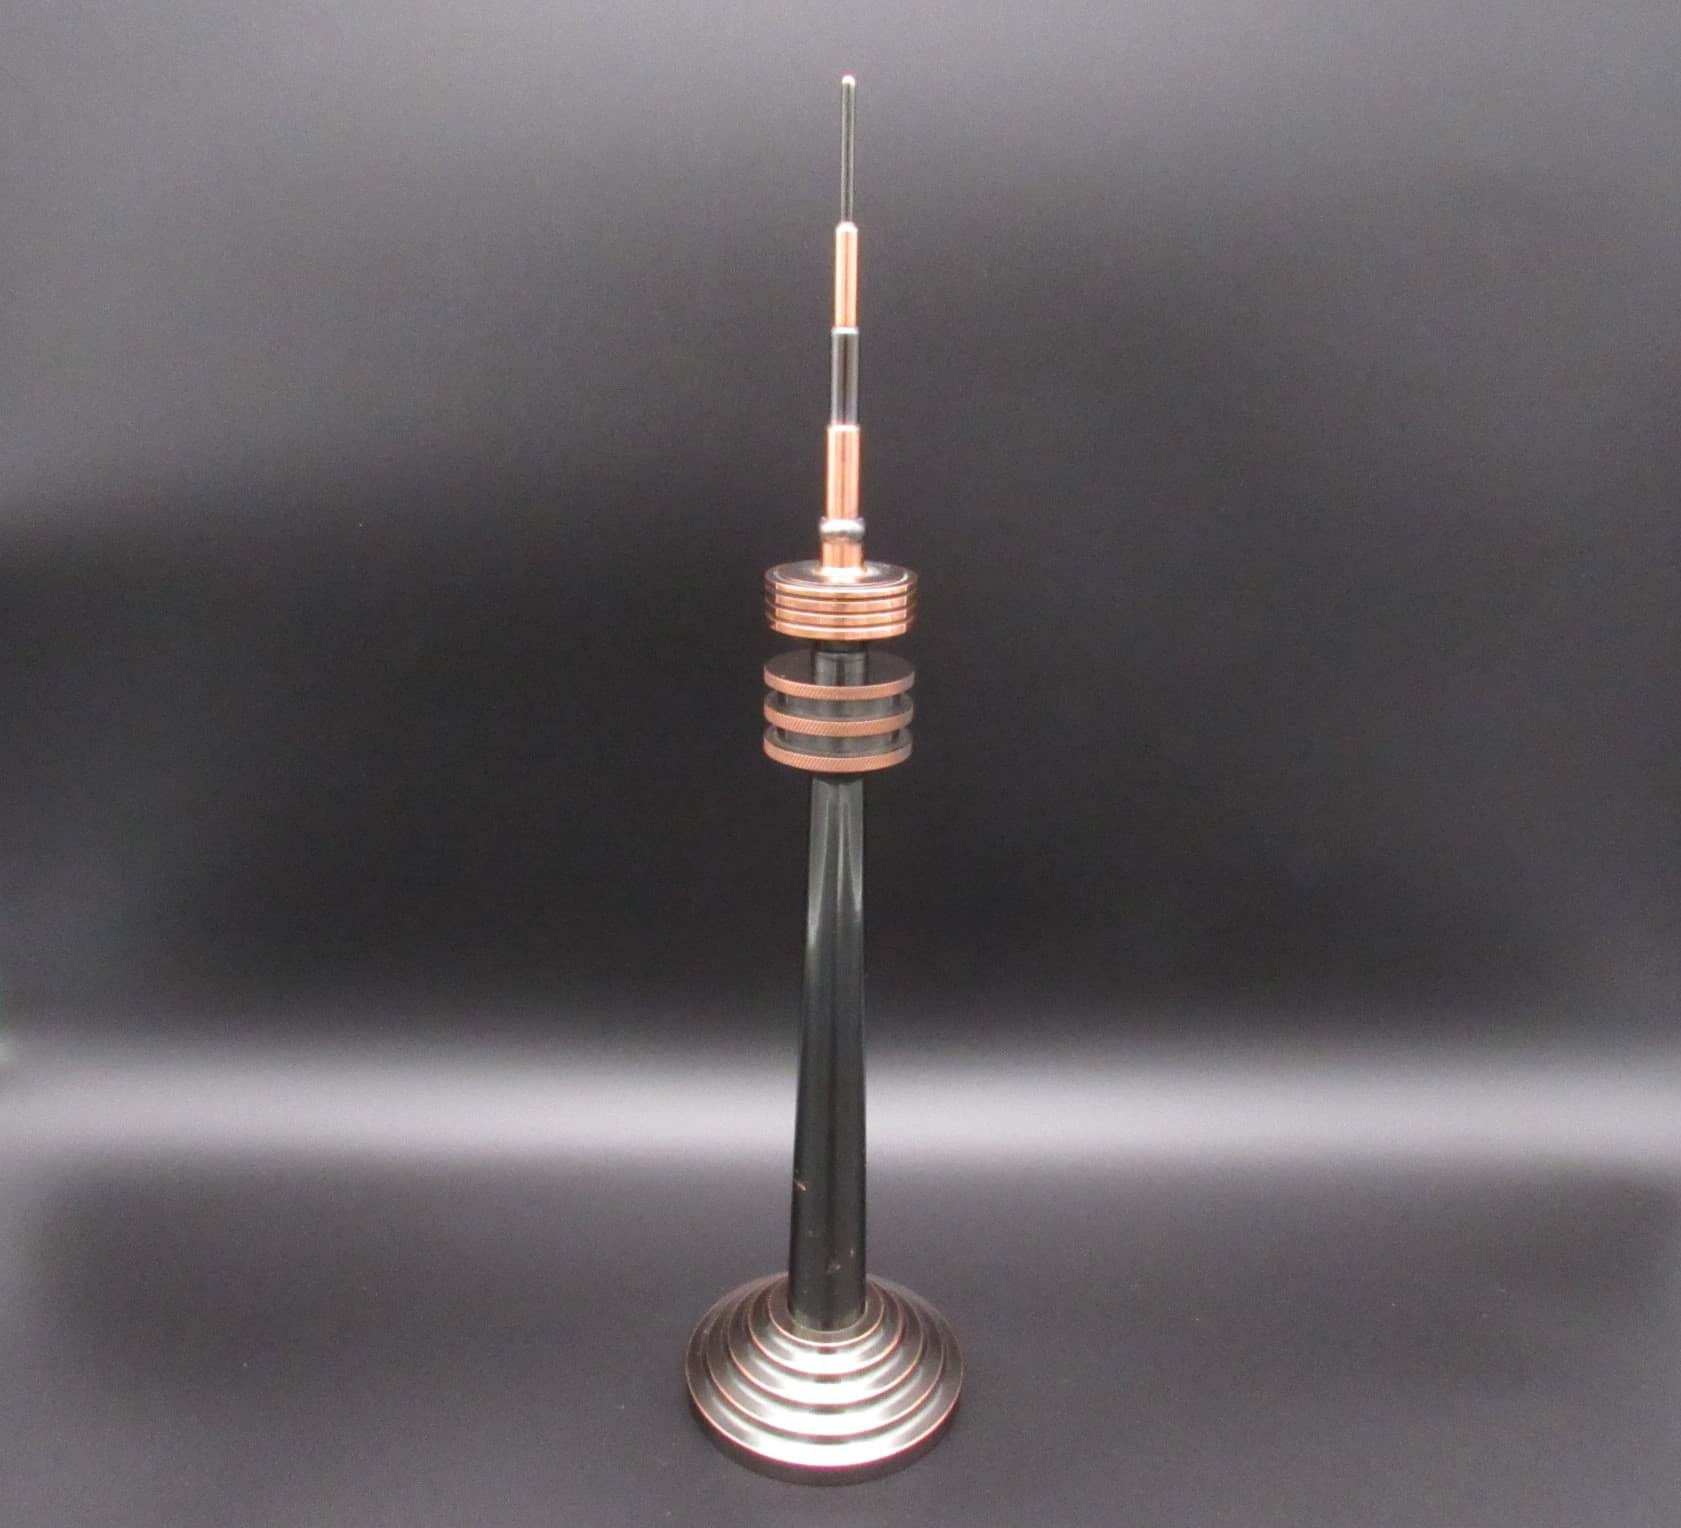 Bild av Miniatur Fernsehturm / Funkturm aus Metall, Kunsthandwerk, 32 cm
